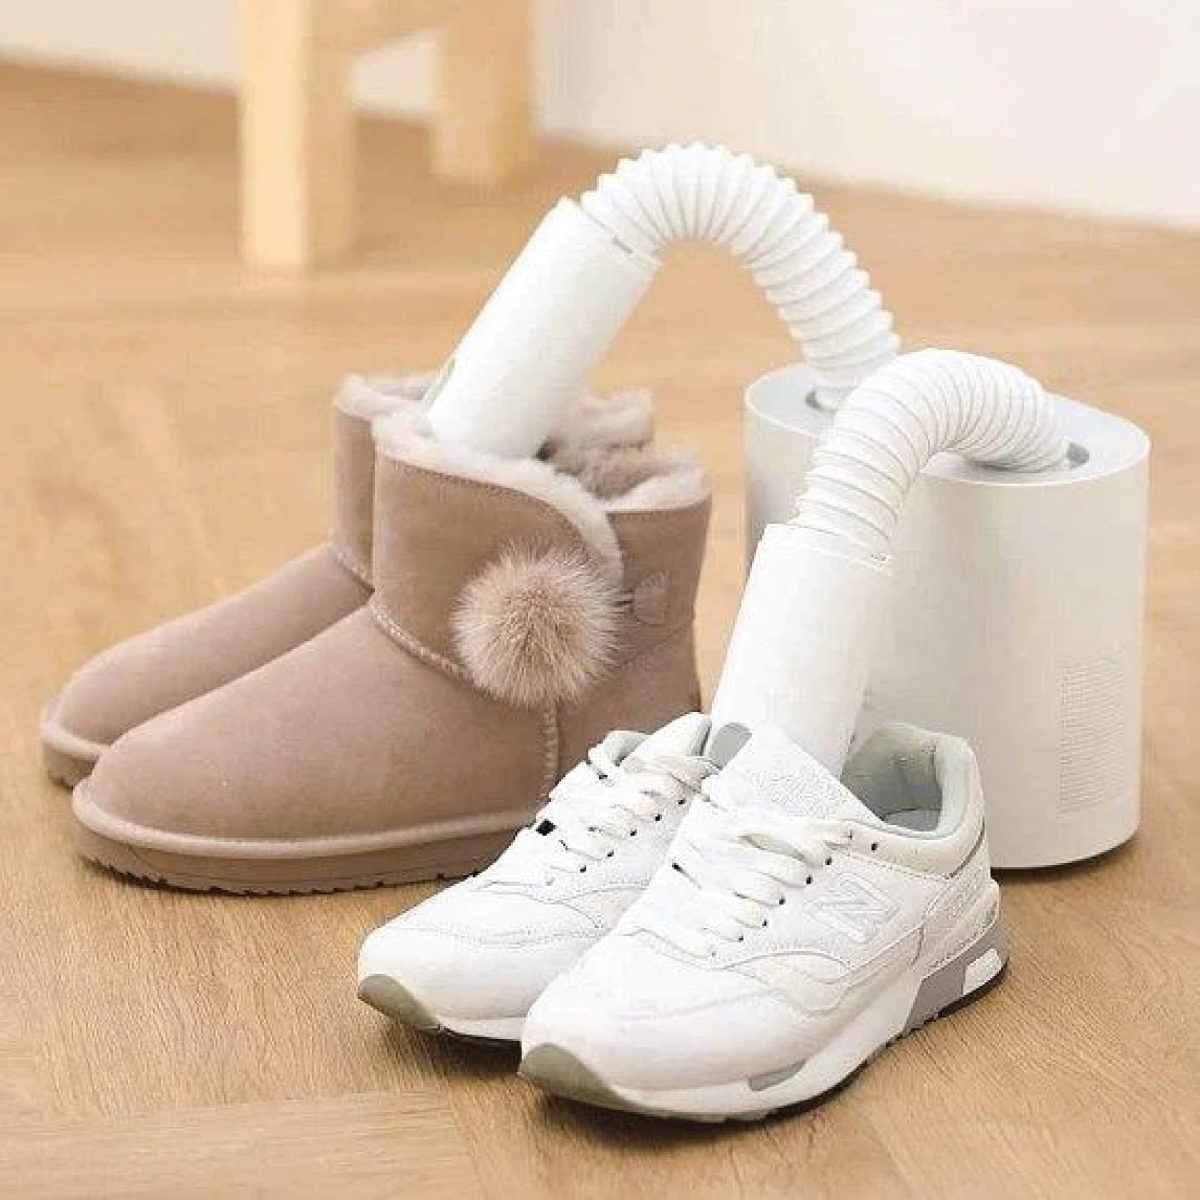 Shoes 01 Https://Youtu.be/Mkdghi0Kicg Deerma Deerma Shoe Dryer Hx20 (Ozone Deodorization) - Healthy Home